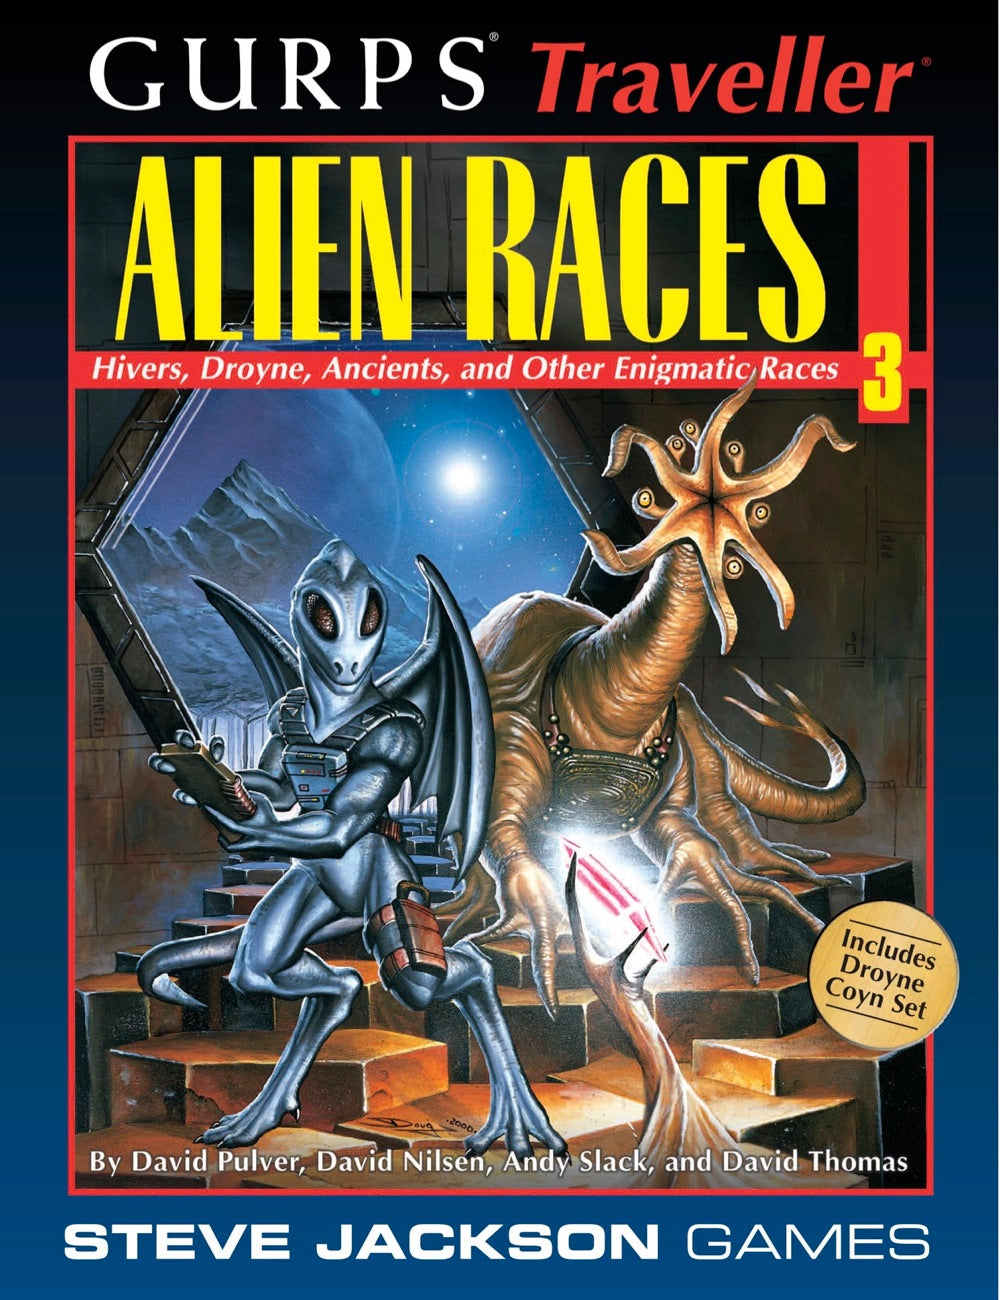 GURPS Traveller Classic: Alien Races 3